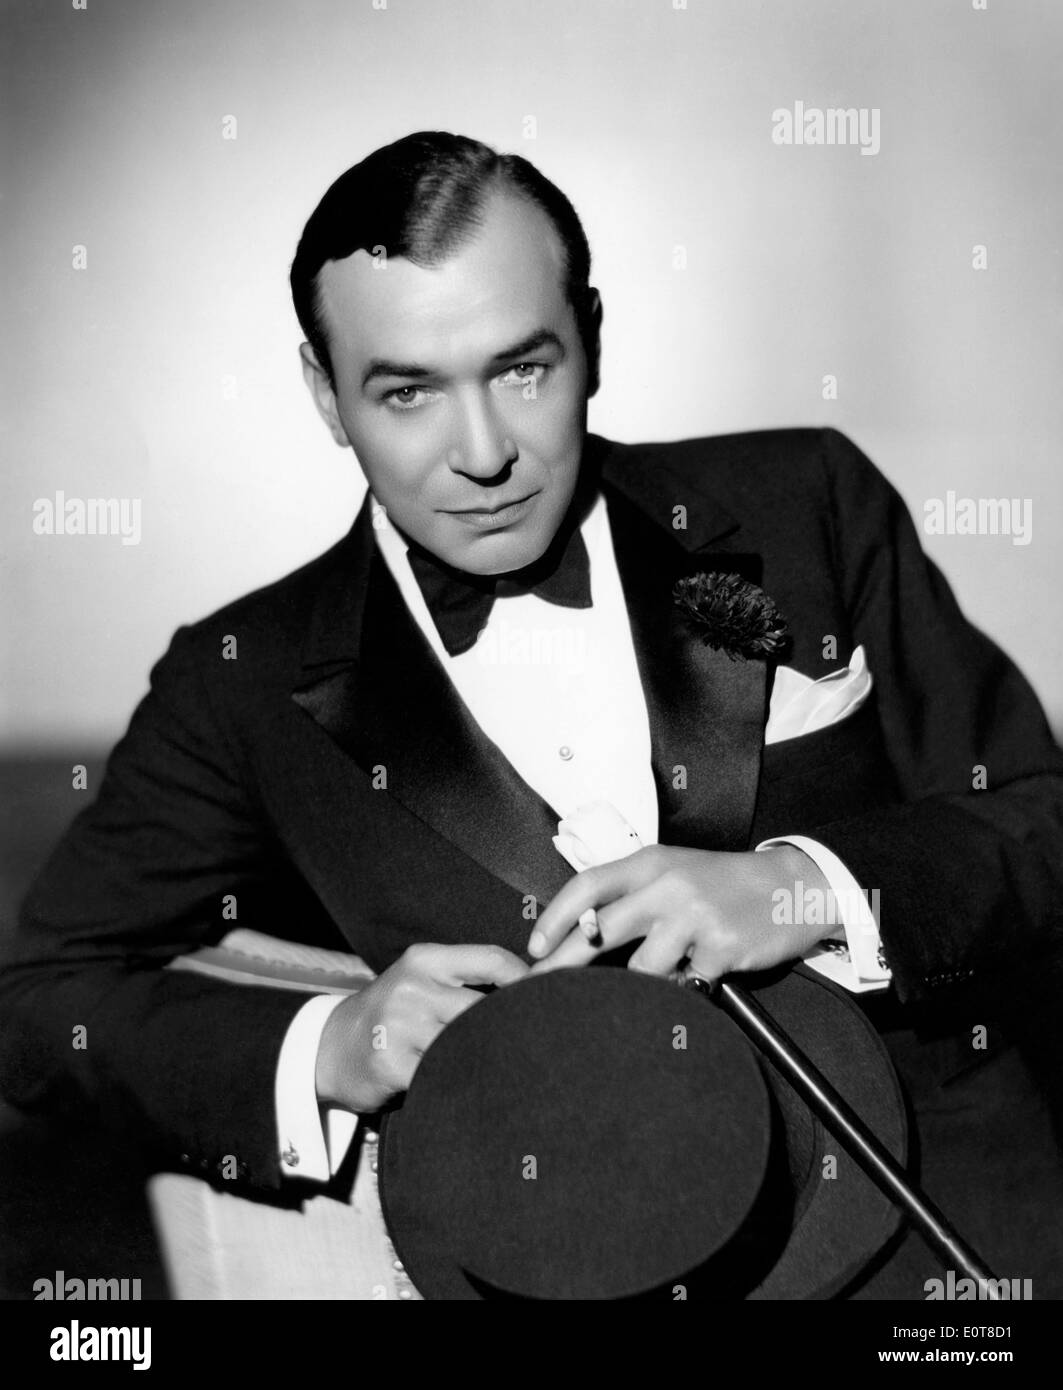 Harry Richman, American Entertainer, Studio Portrait in Tuxedo, circa 1930's Stock Photo